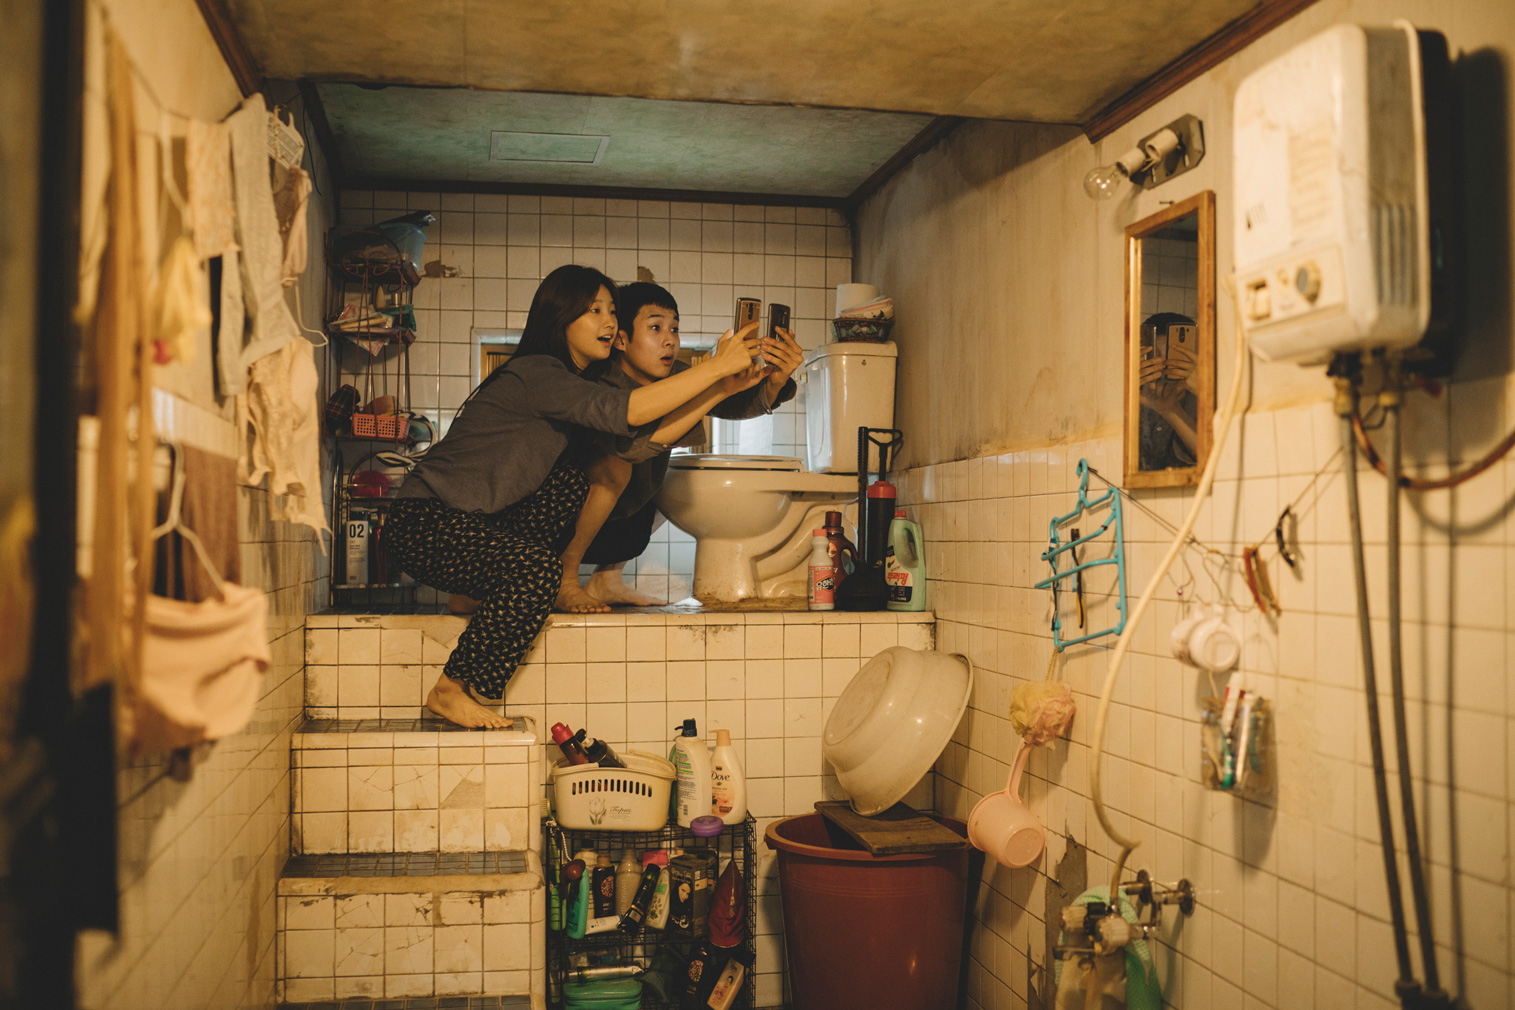 Go inside the architecture of South Korean film 'Parasite'